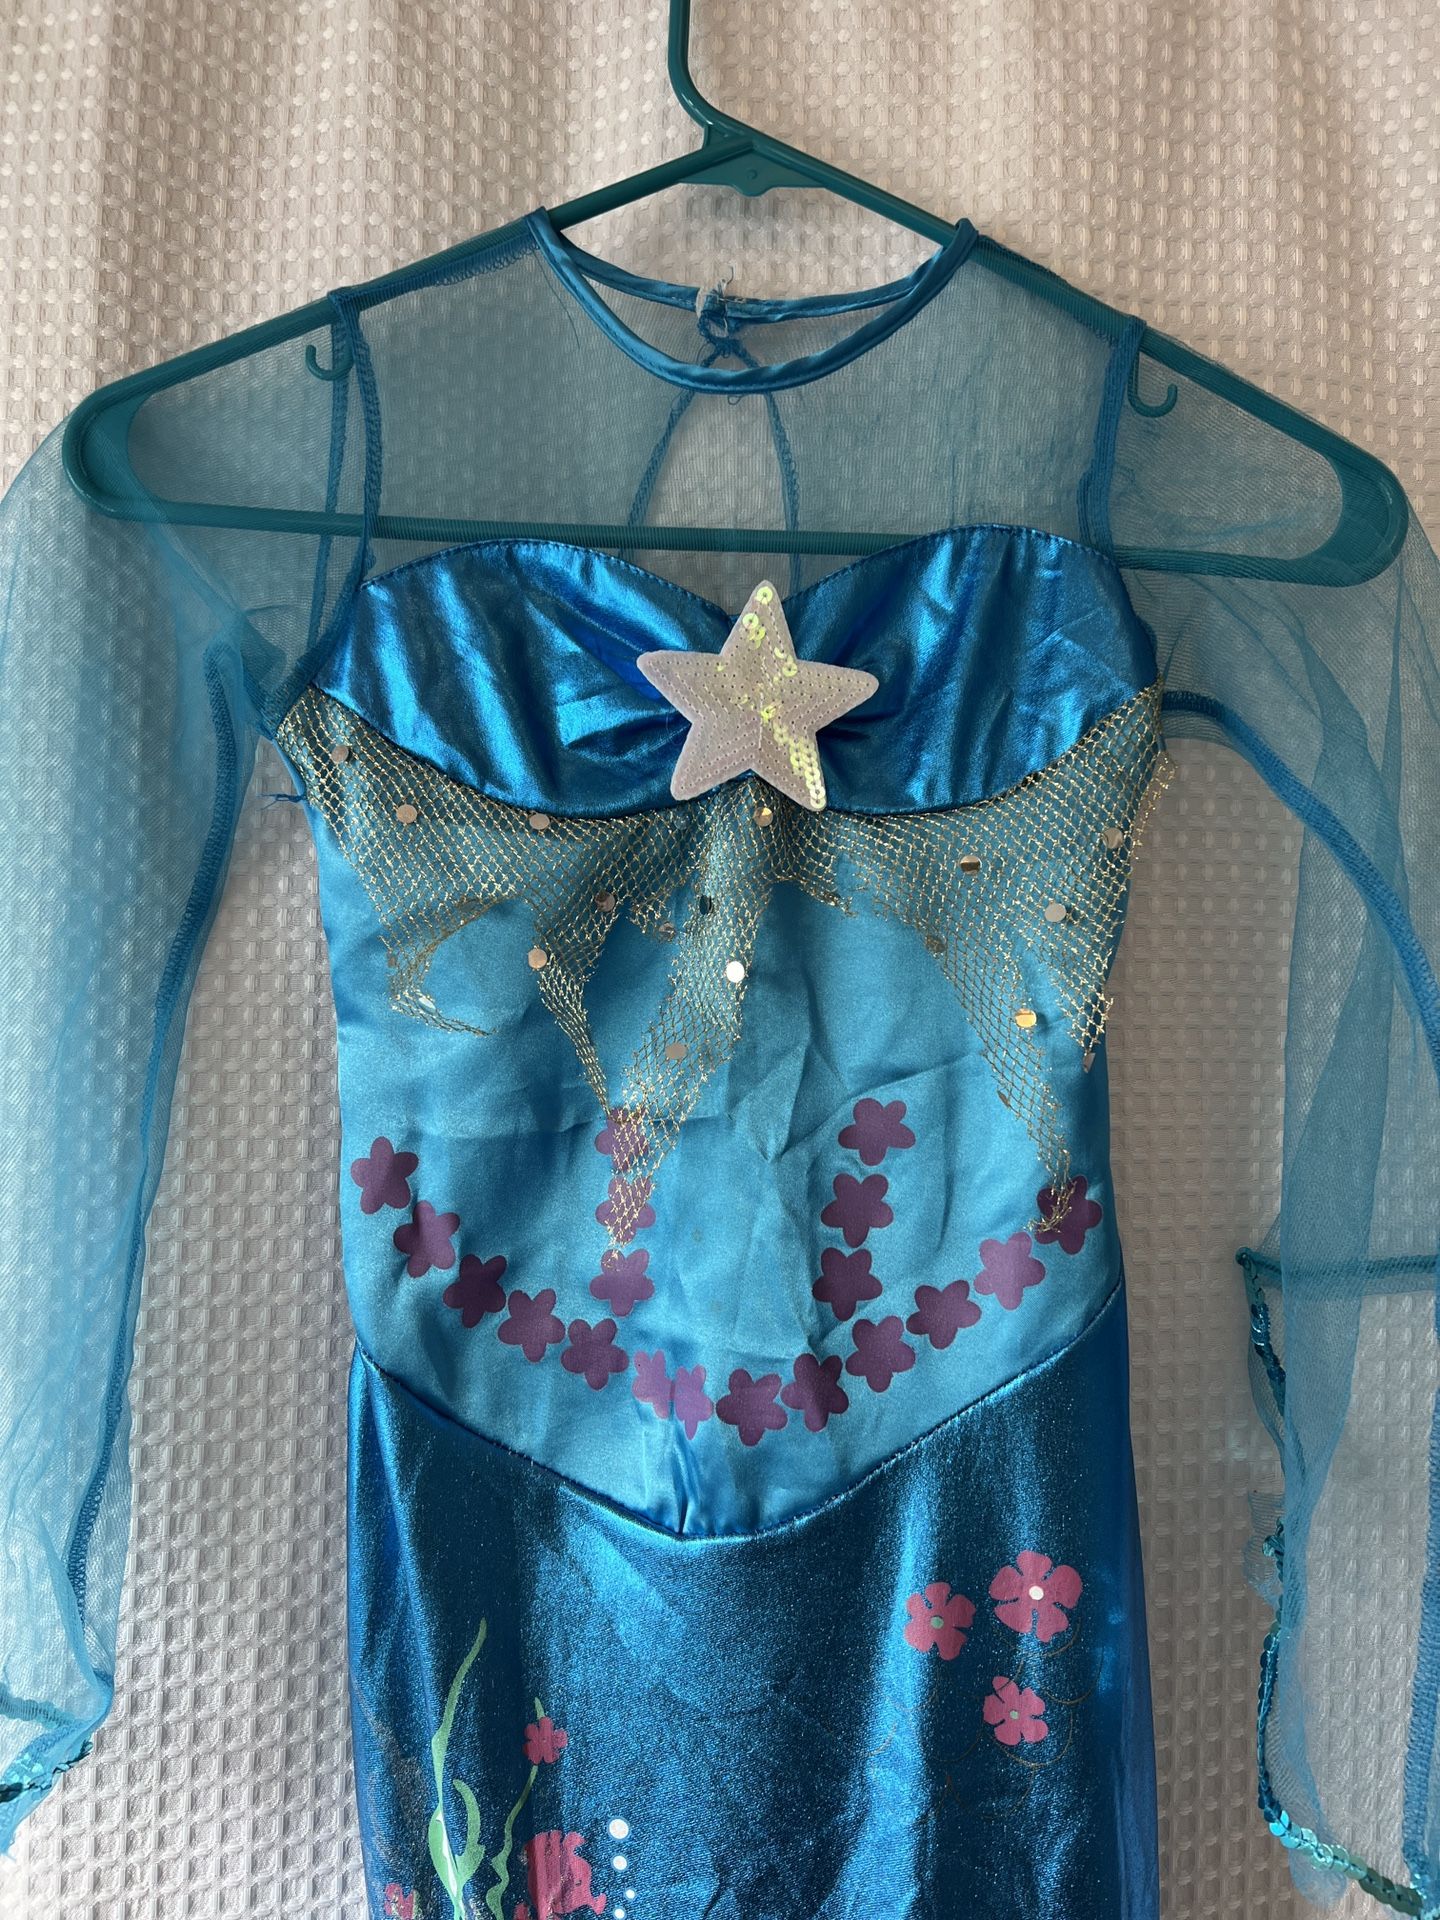 Rubies Mermaid Costume, Size Small 3-4